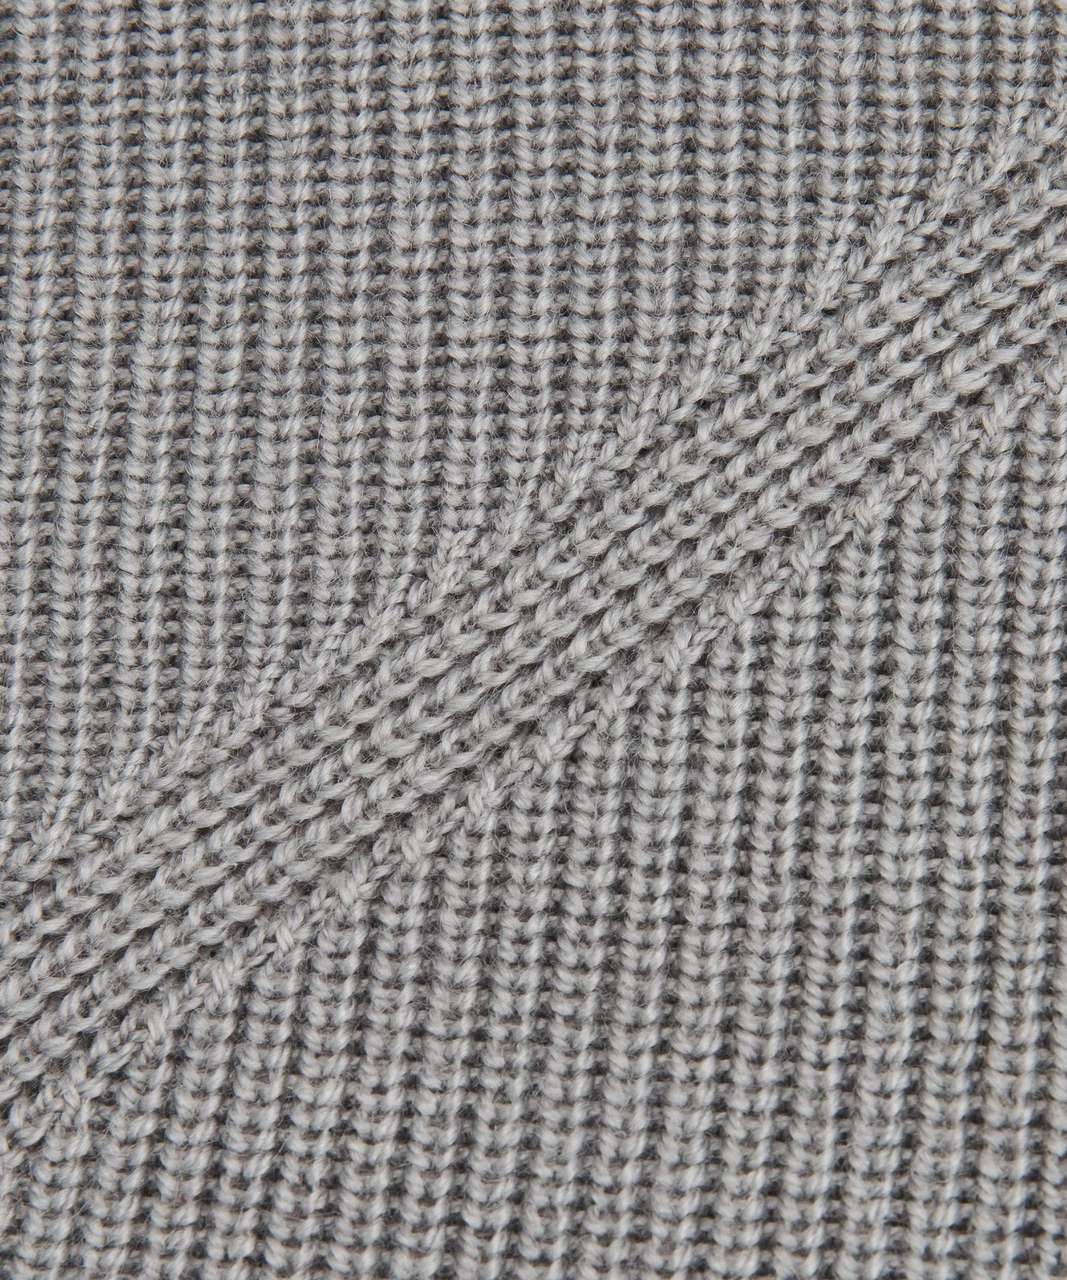 Lululemon Merino Wool-Blend Ribbed Long Wrap Sweater - Heathered Gull Grey